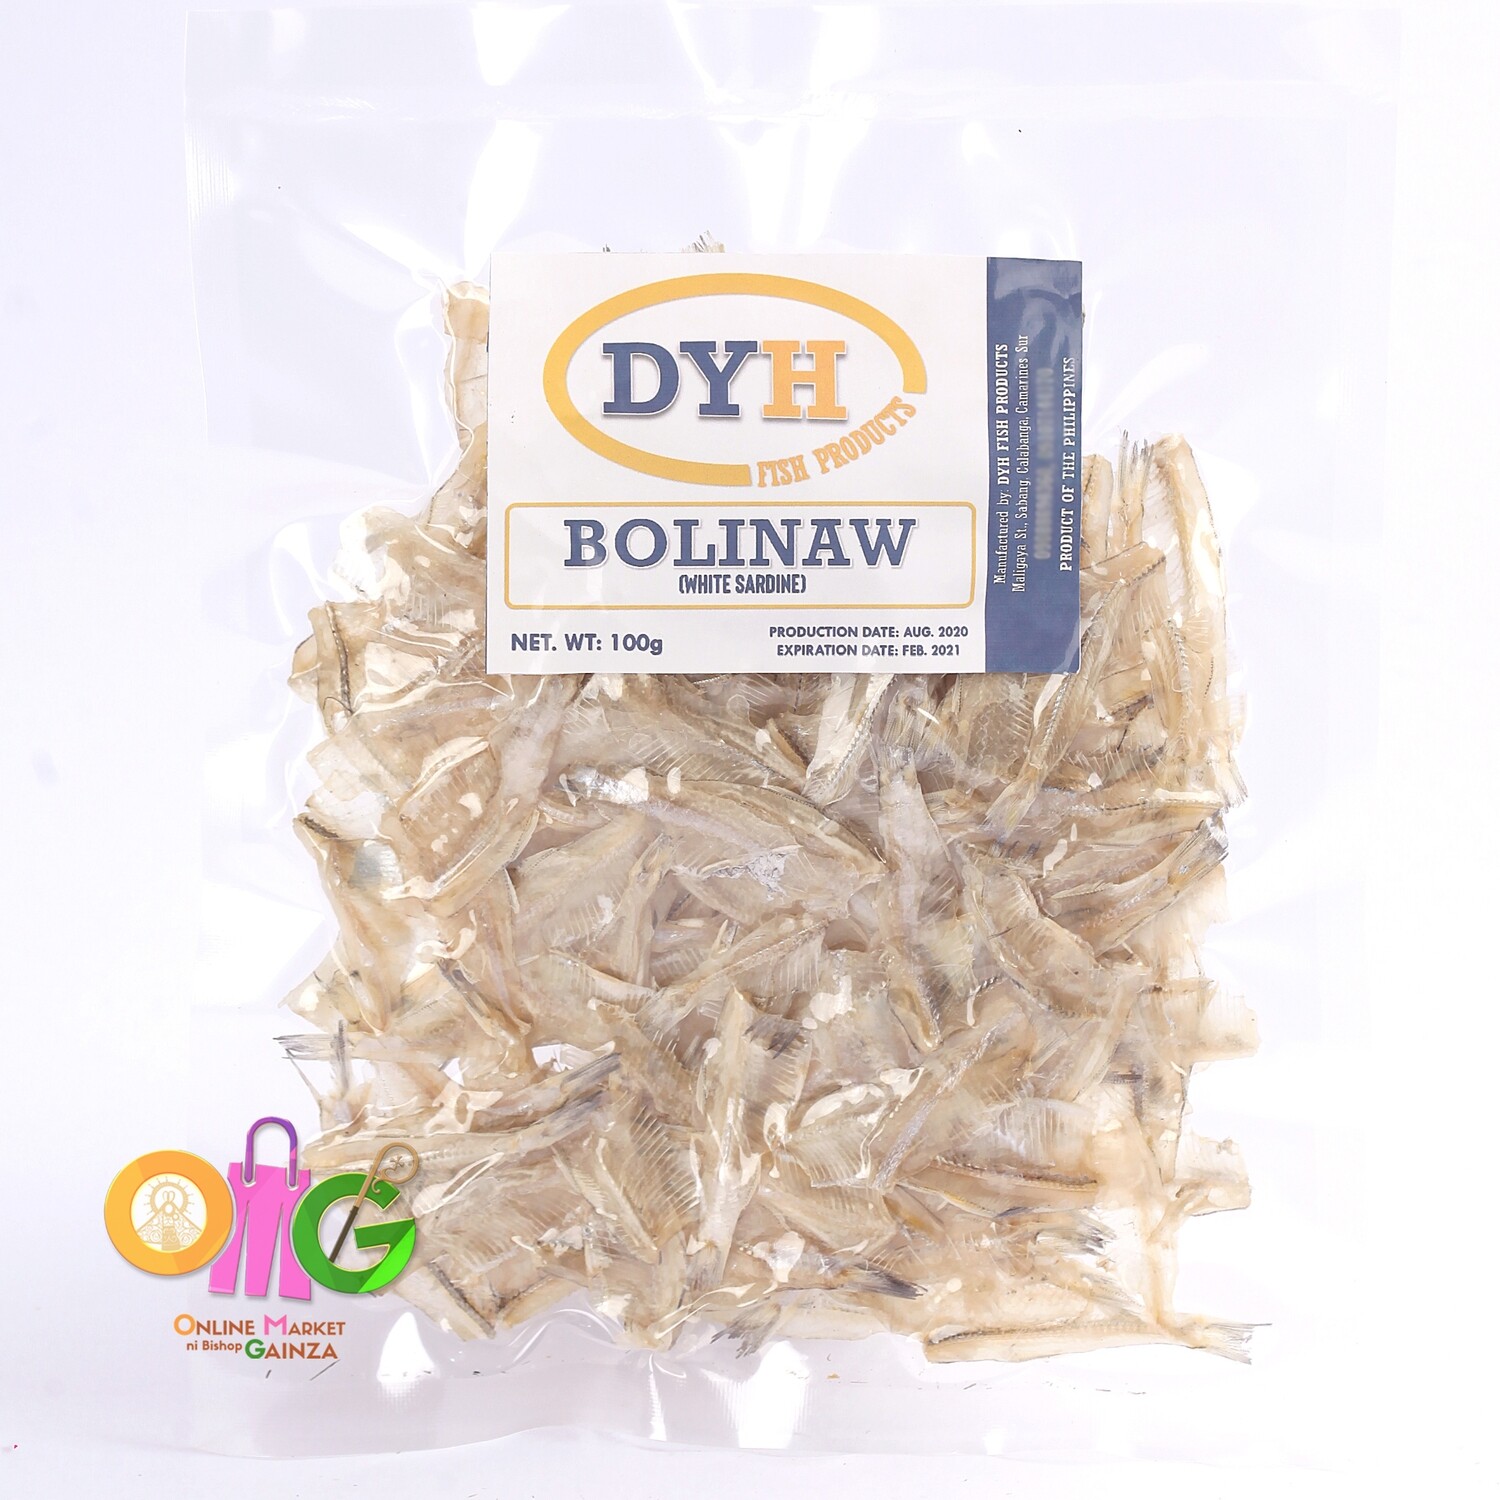 DYH Fish Products - Bolinaw